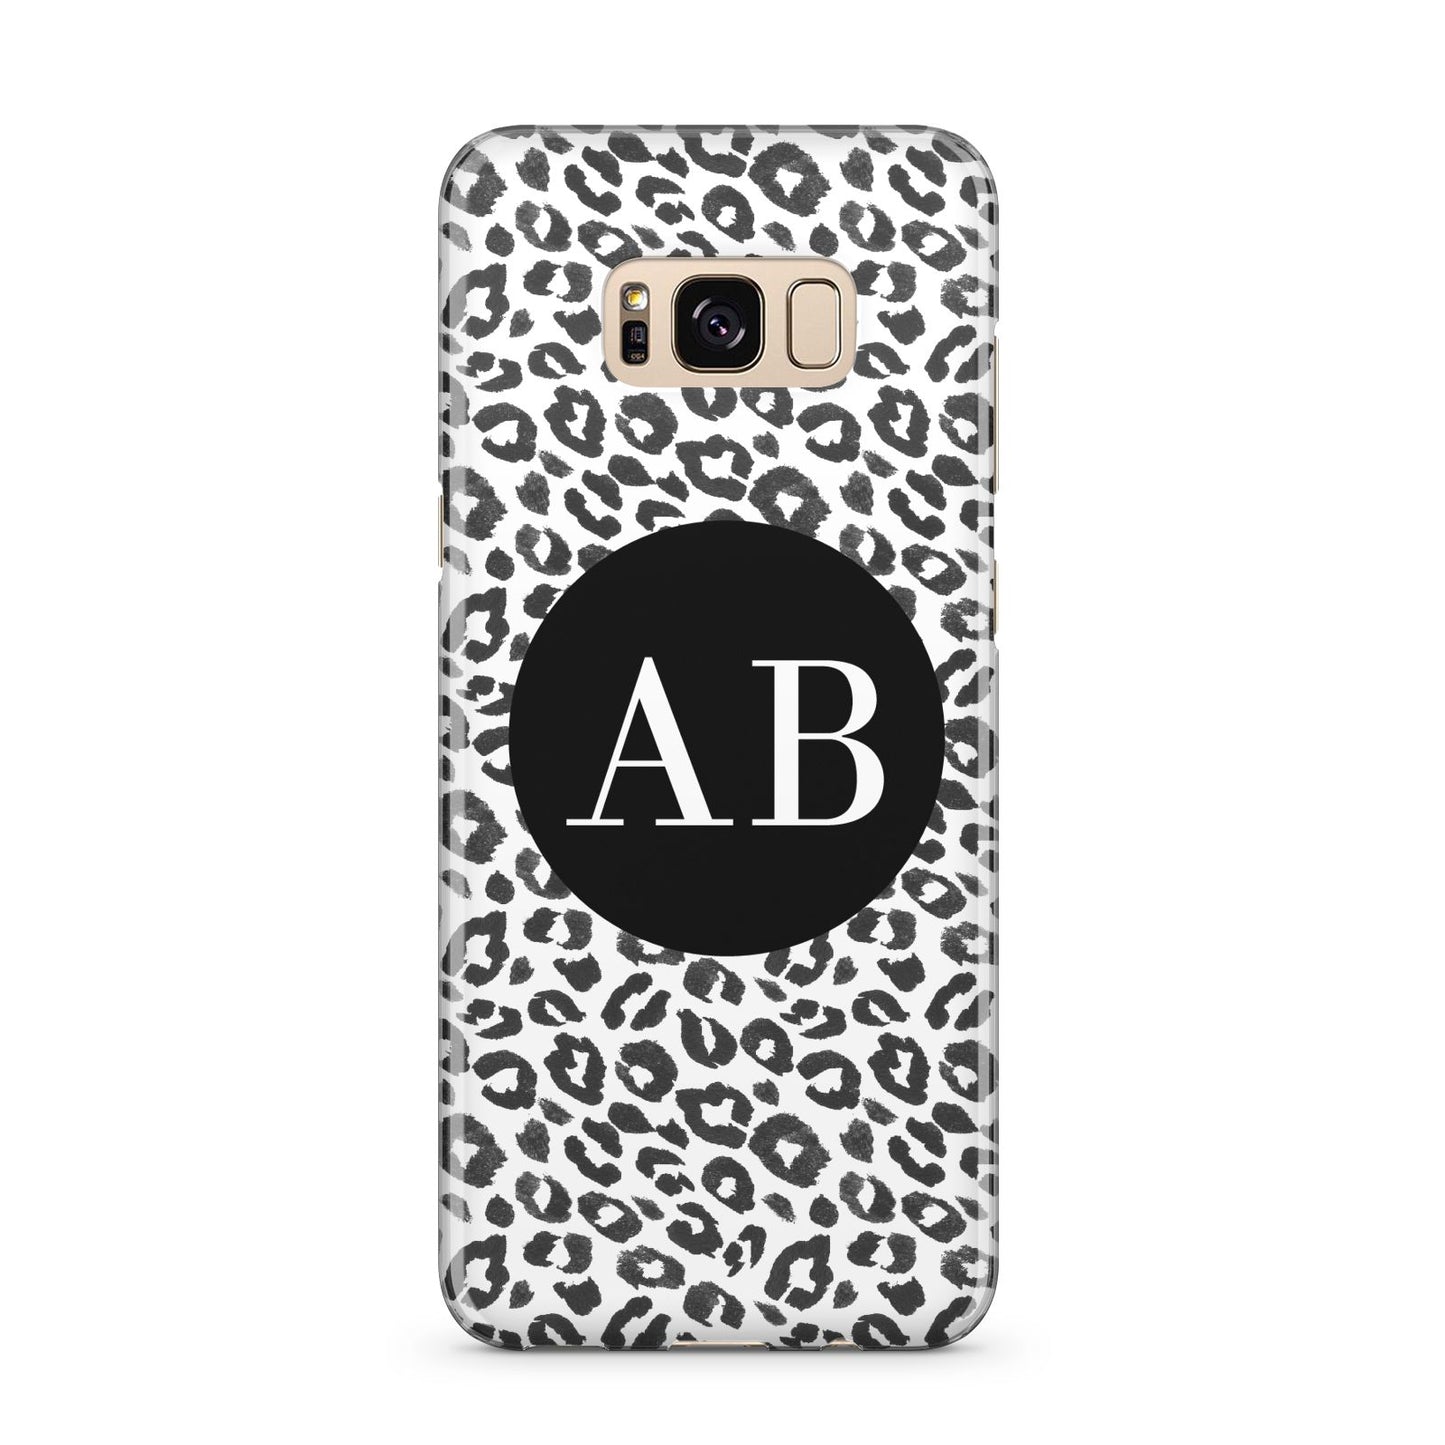 Leopard Print Black and White Samsung Galaxy S8 Plus Case